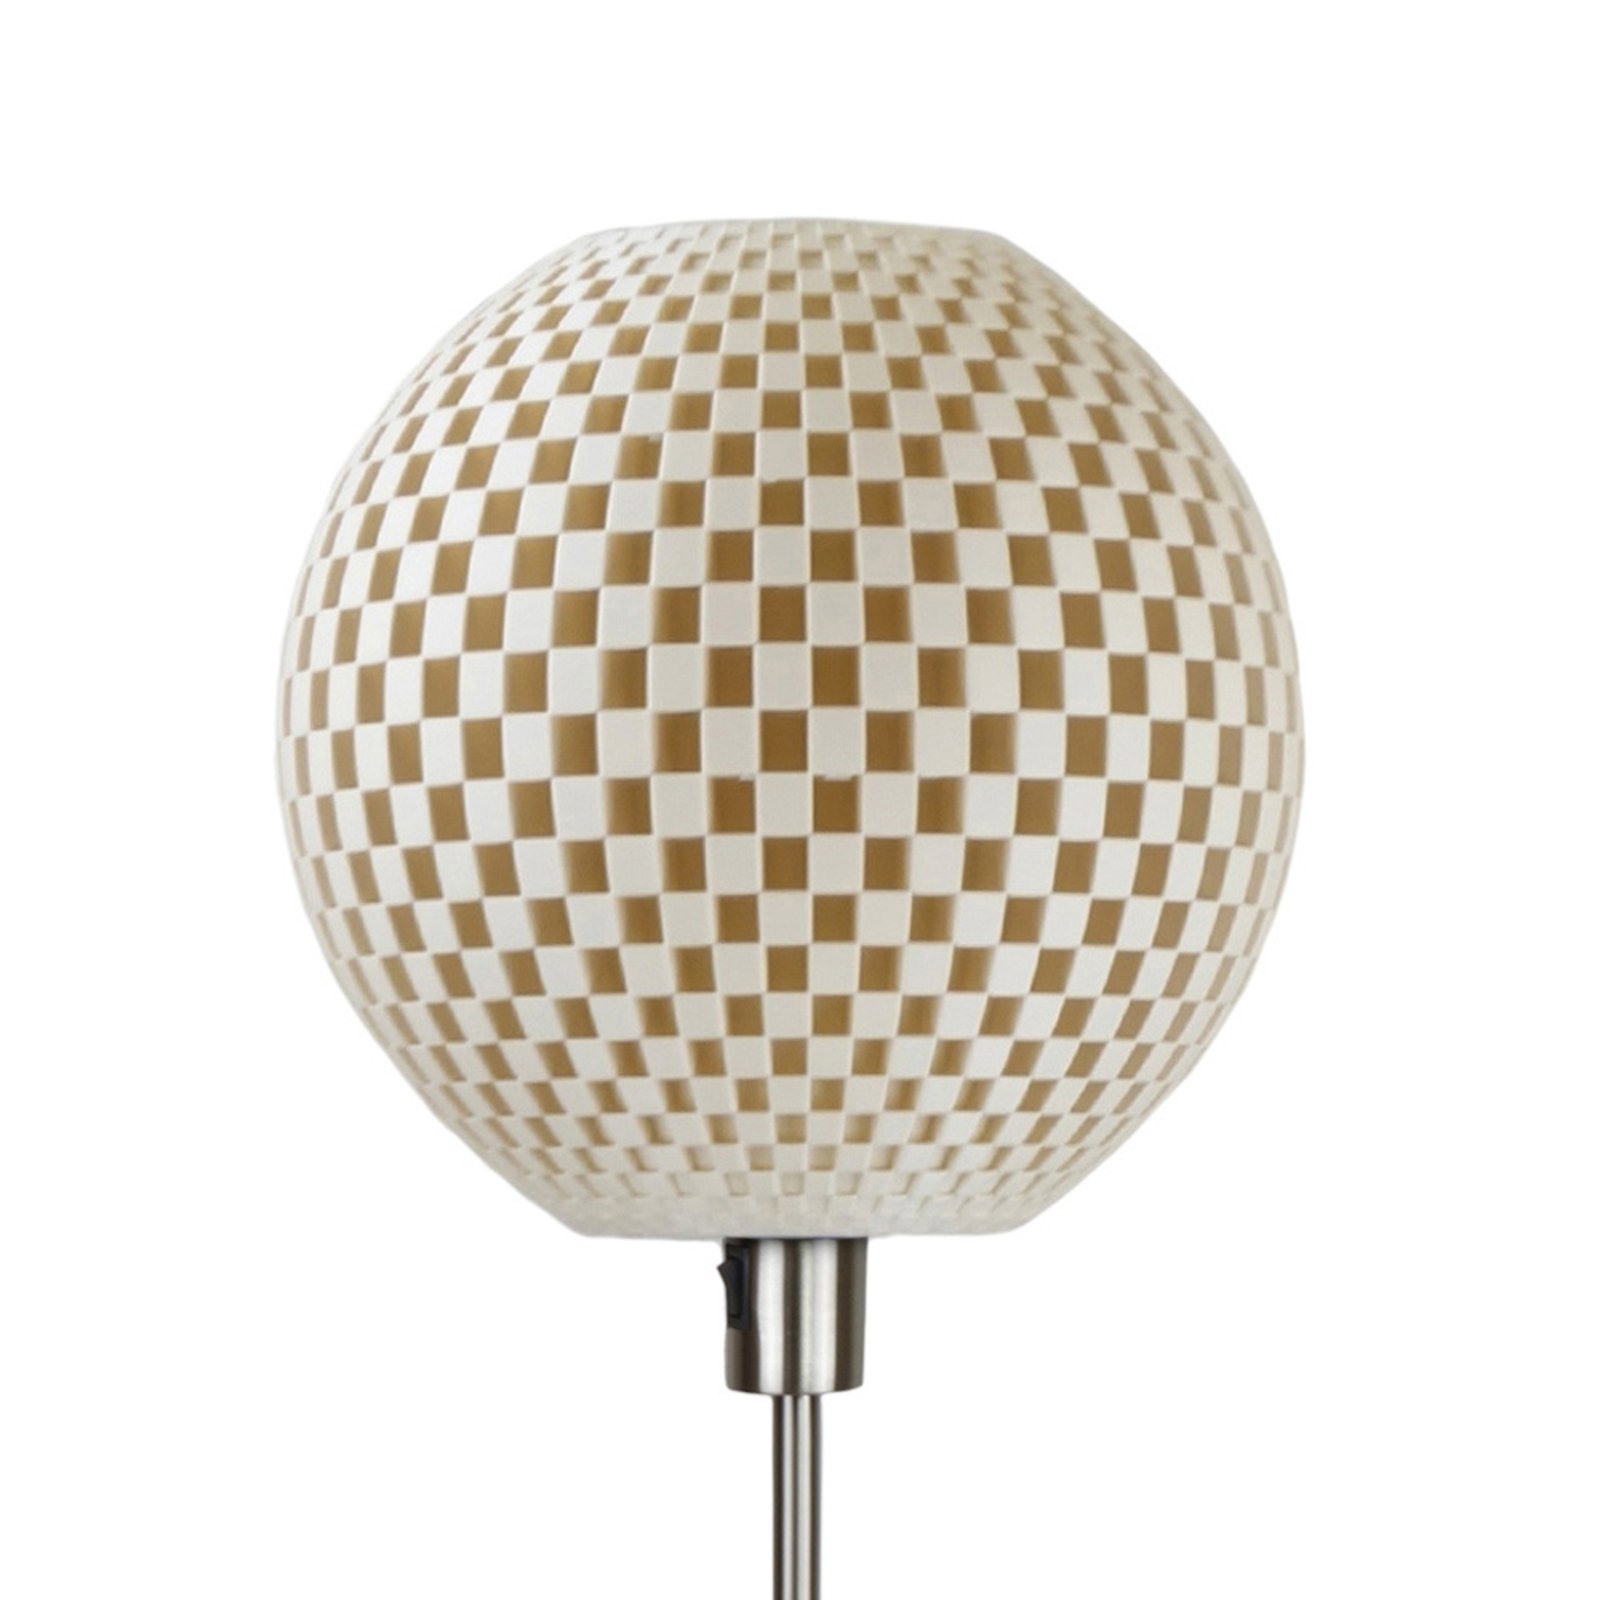 Woven floor lamp, globe, cream-white